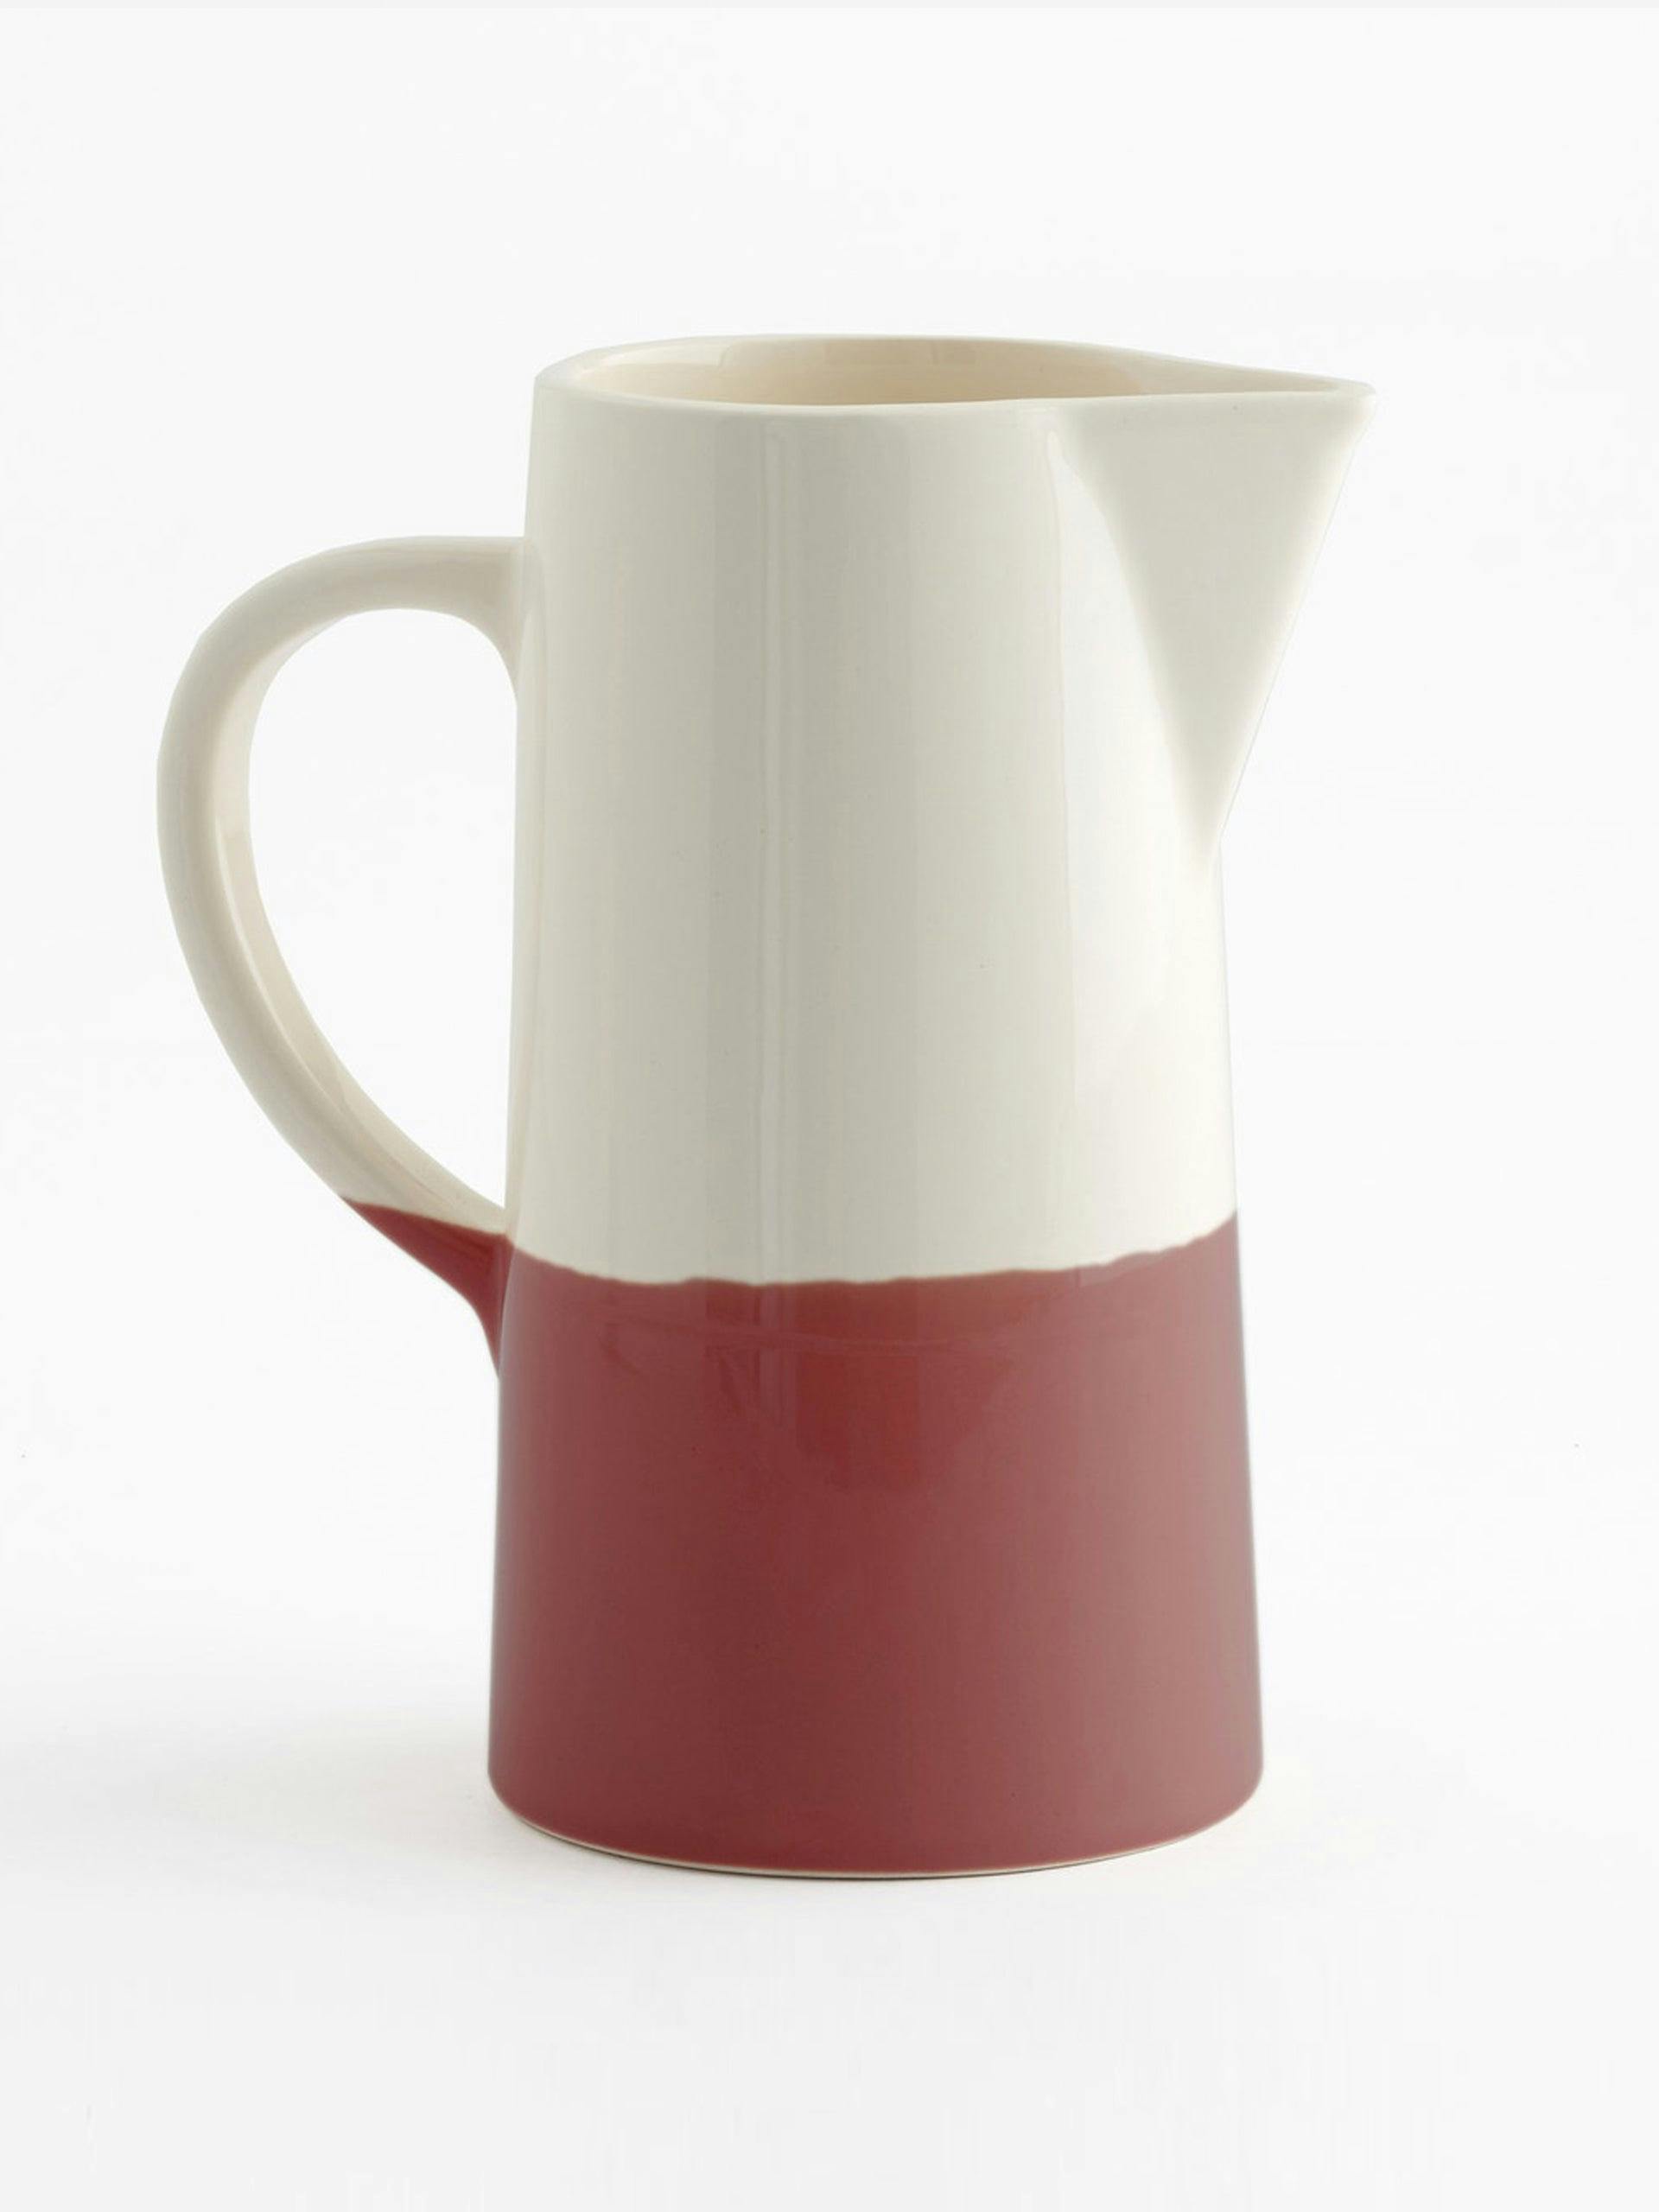 Red and white ceramic jug